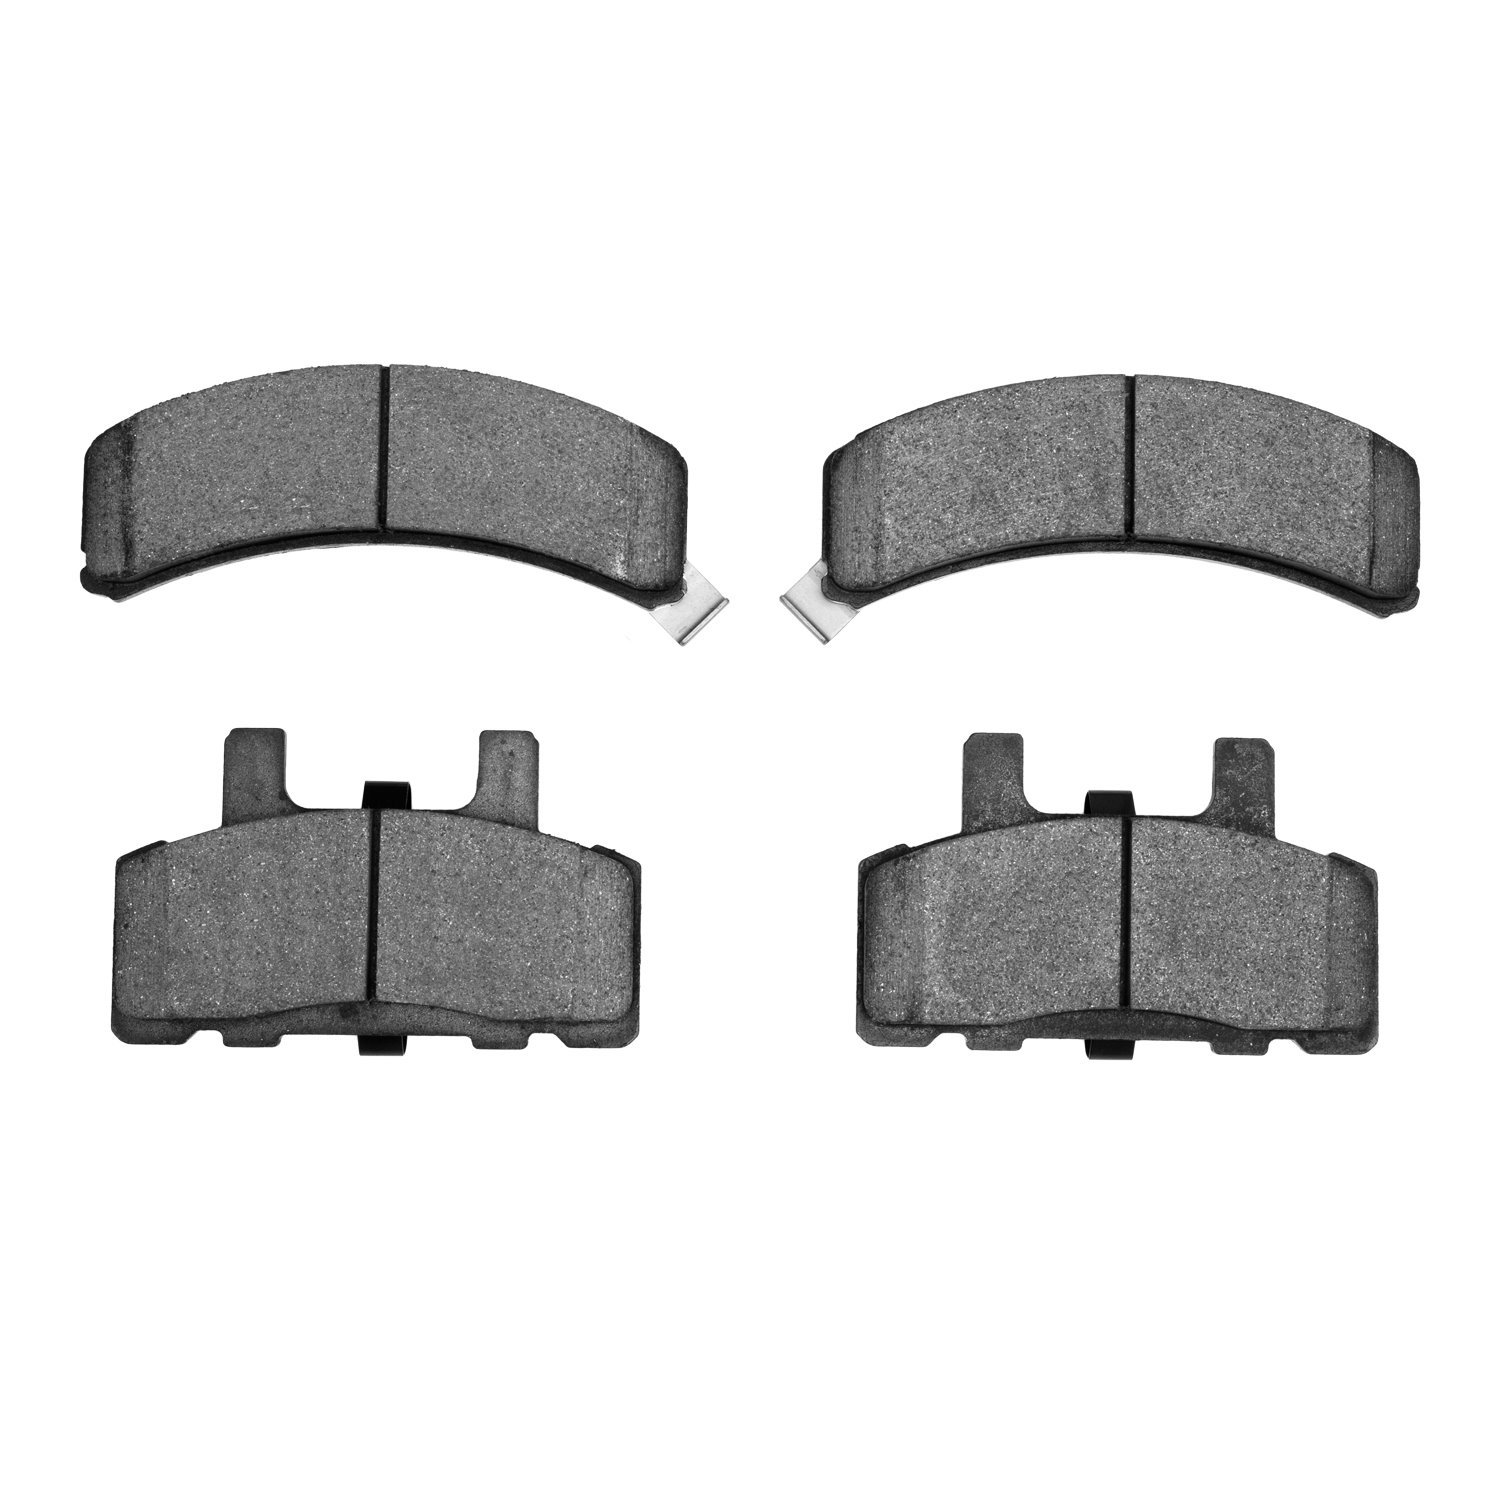 1310-0369-00 3000-Series Ceramic Brake Pads, 1988-2002 Multiple Makes/Models, Position: Front